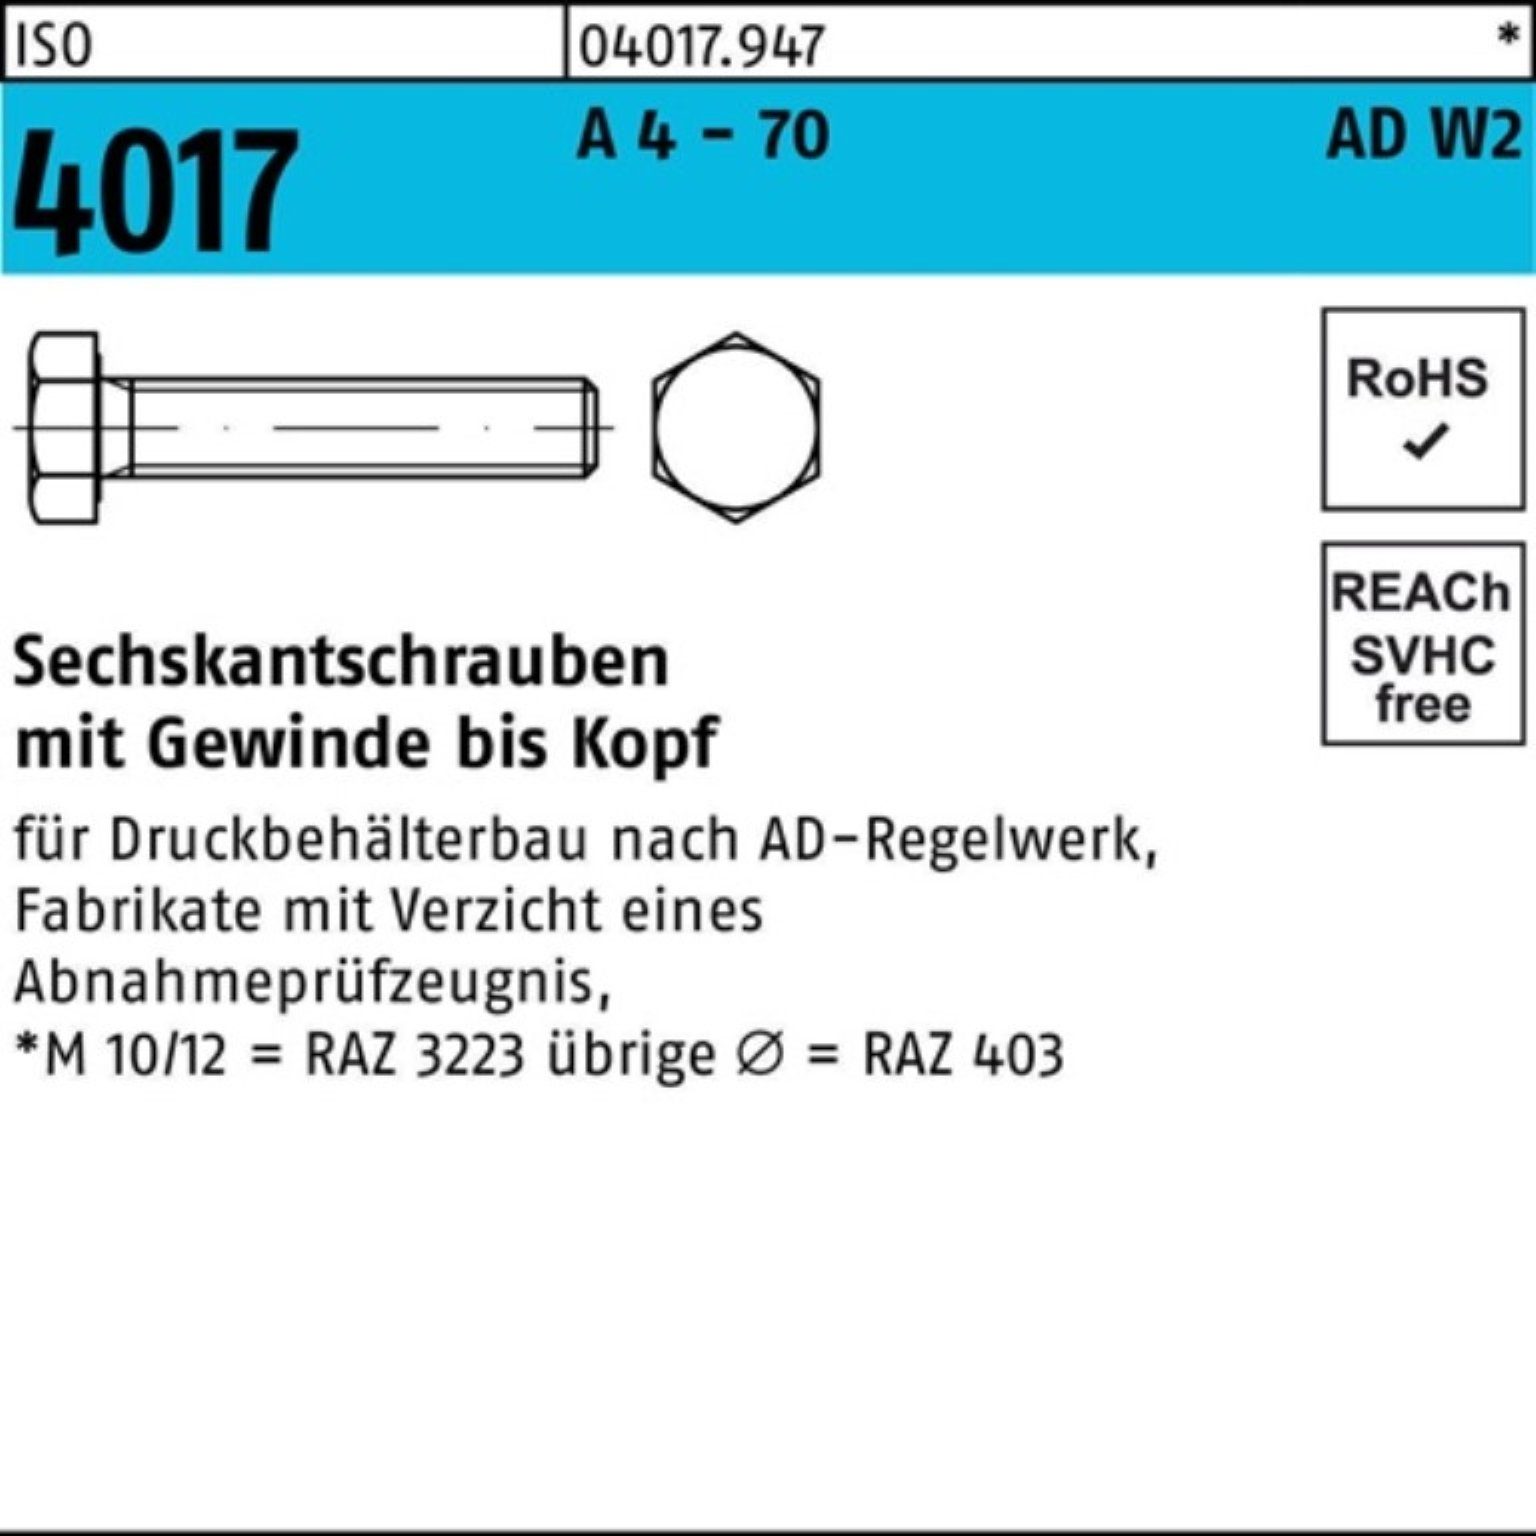 Bufab Sechskantschraube 100er Pack Sechskantschraube ISO 4017 VG M16x 45 A 4 - 70 AD-W2 25 St